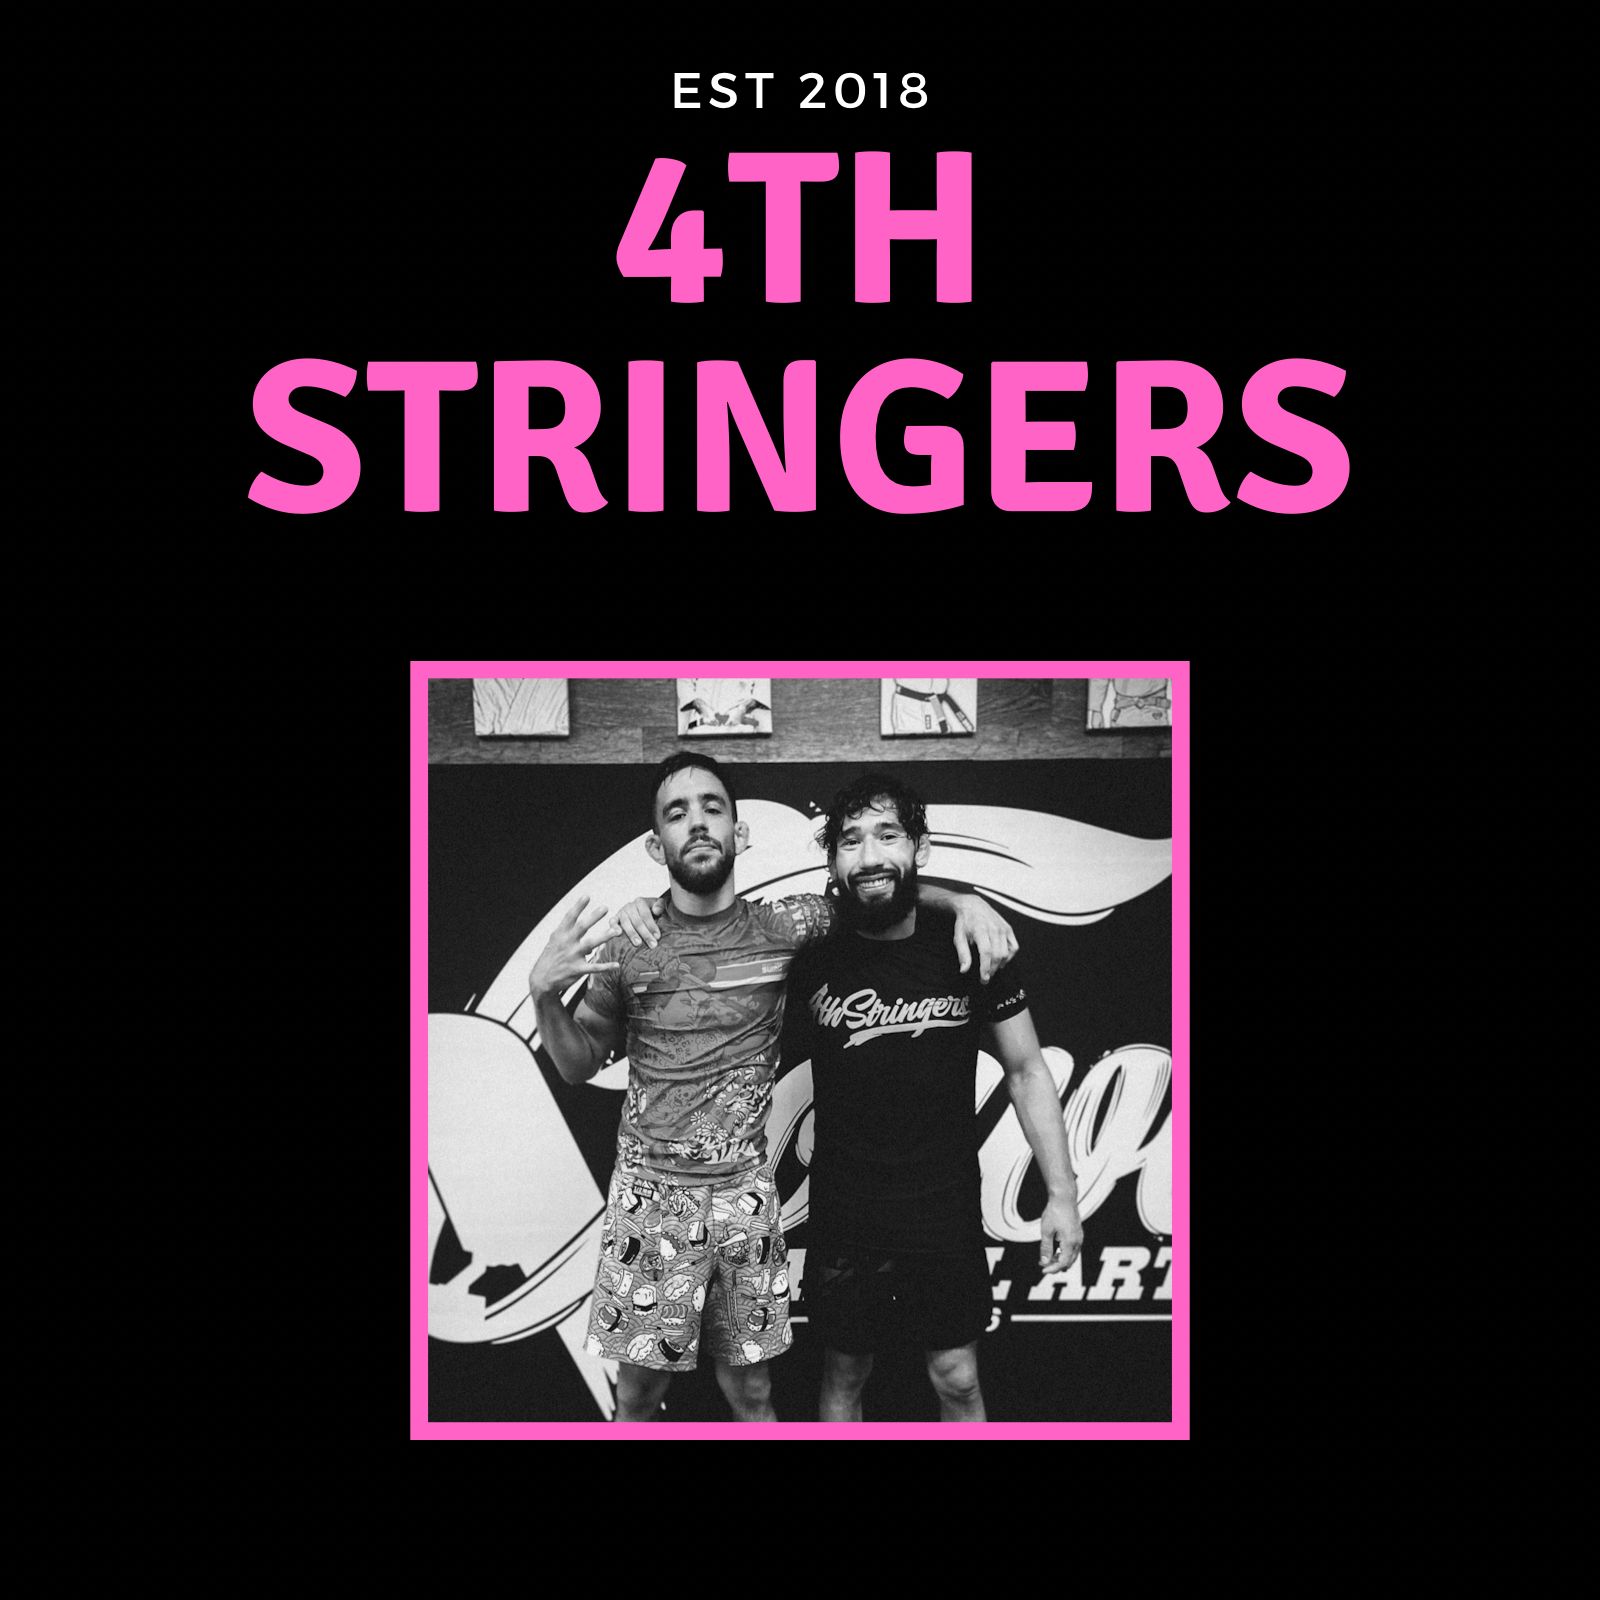 4th stringers